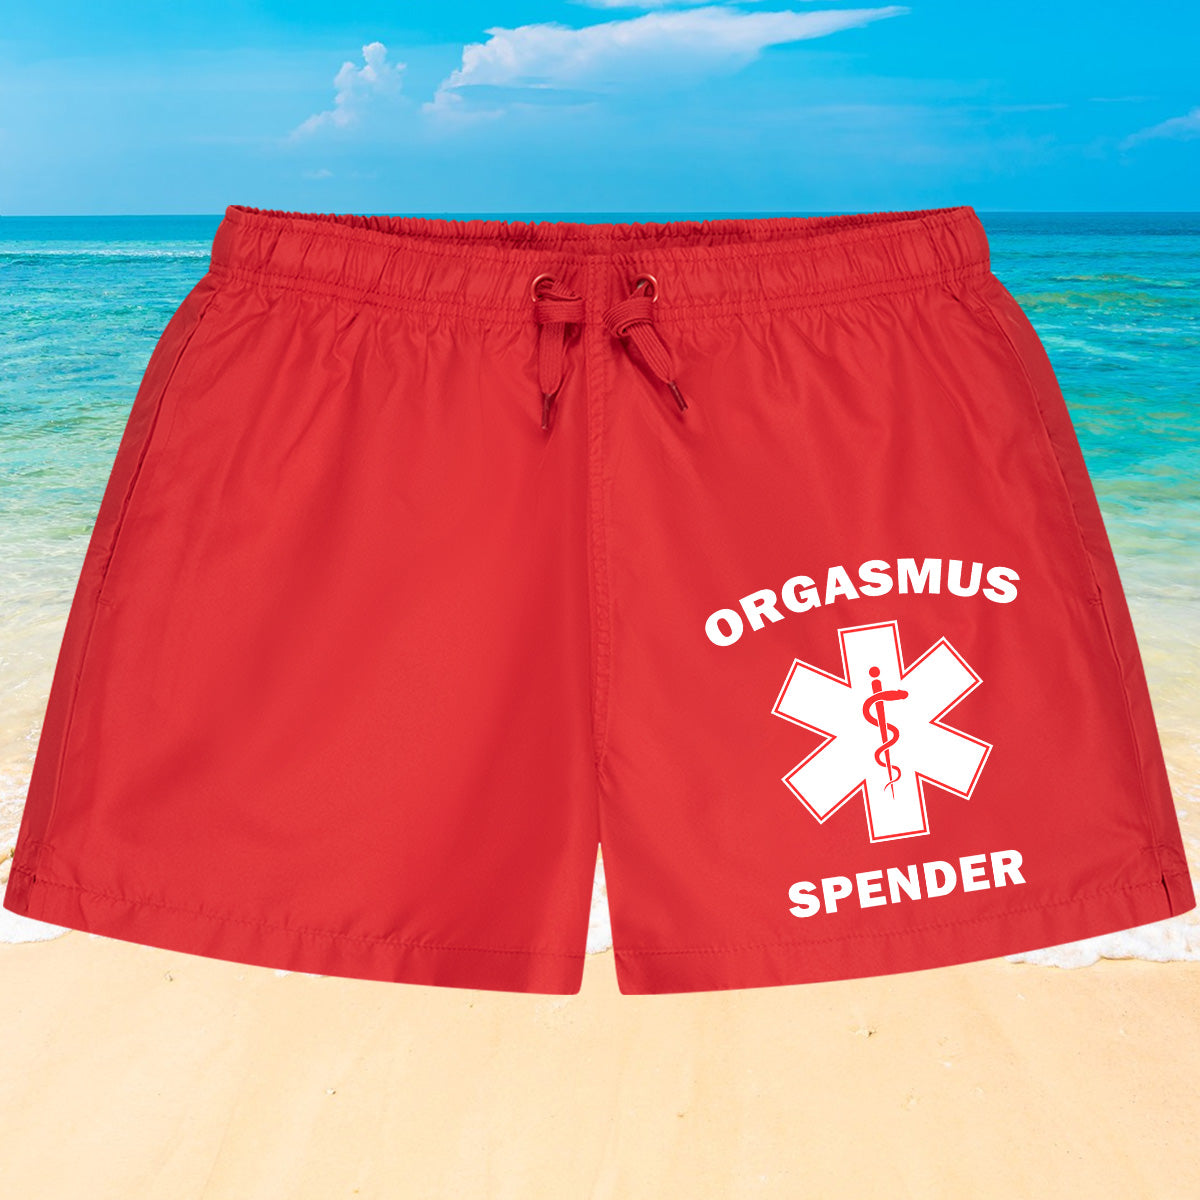 ORGASMUS SPENDER - Premium Badehose